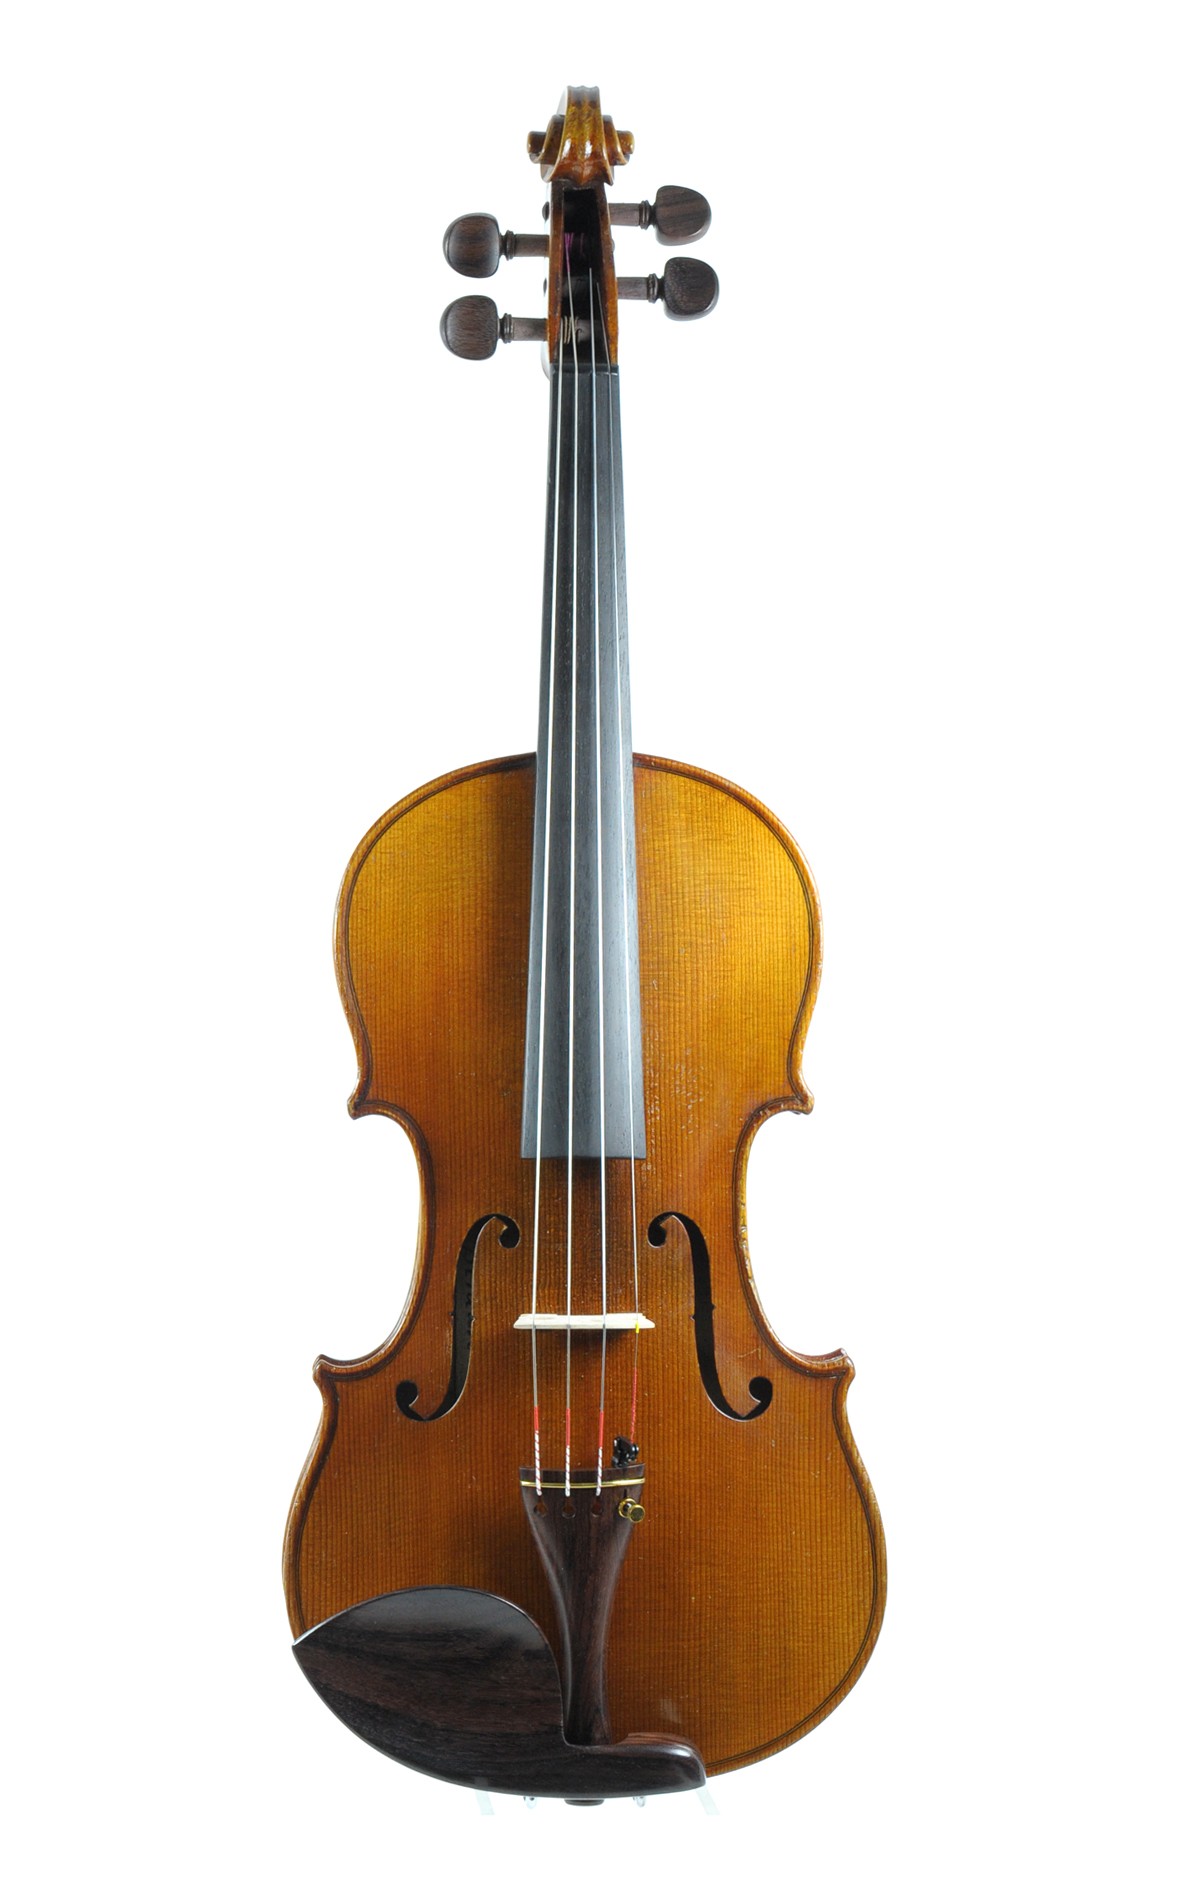 Edelton violin after Stradivari Markneukirchen - top